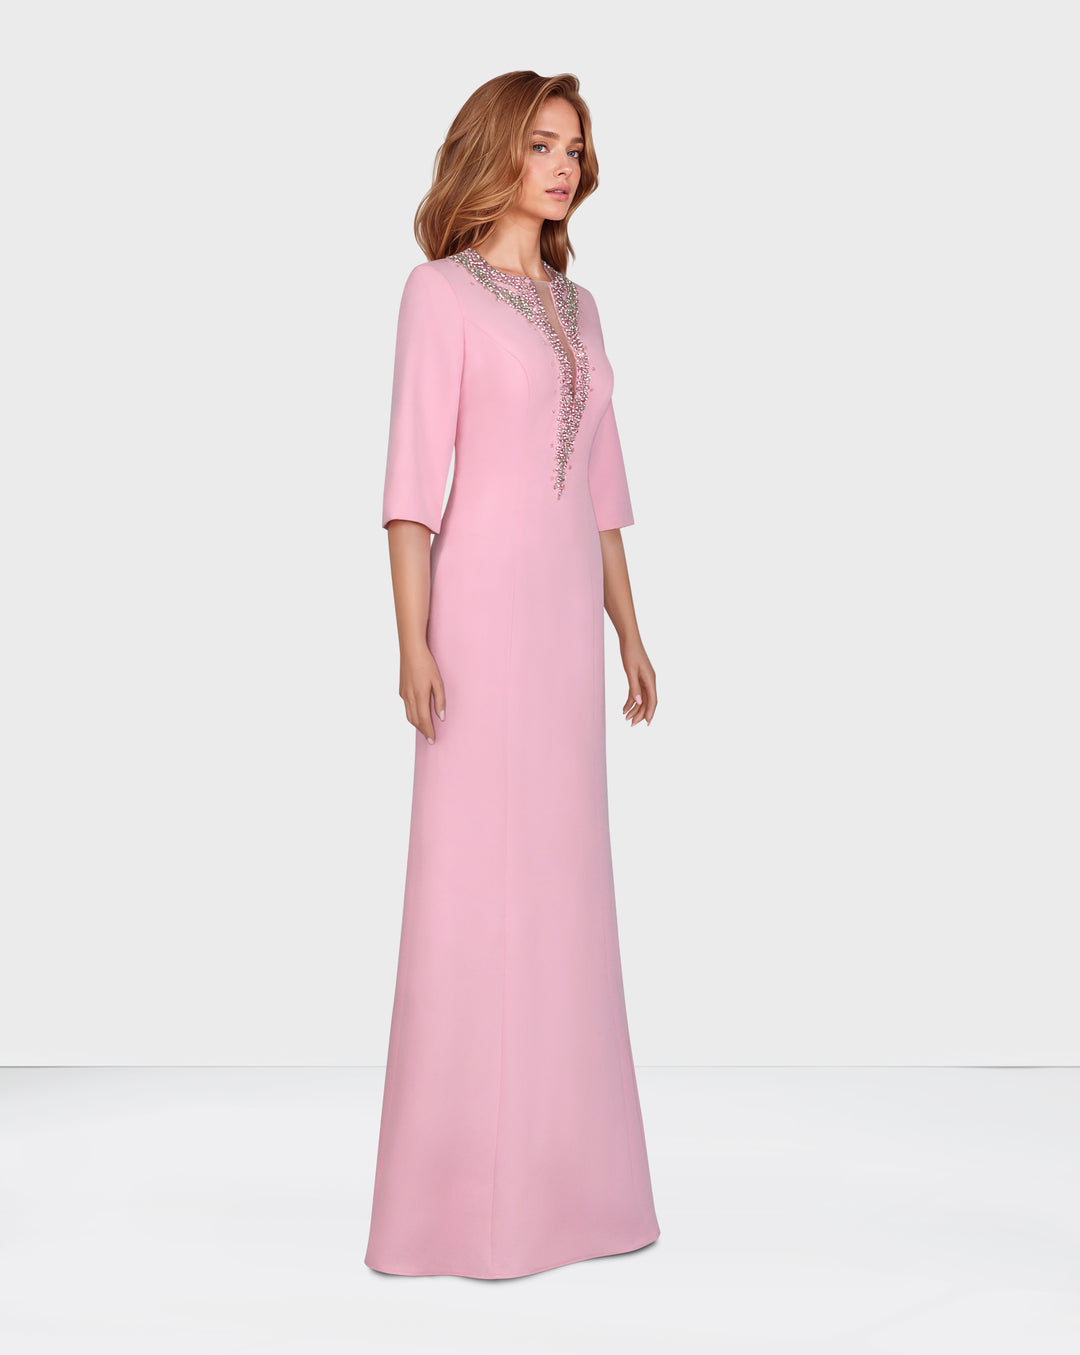 Sequinned neckline - long floor length pink dress